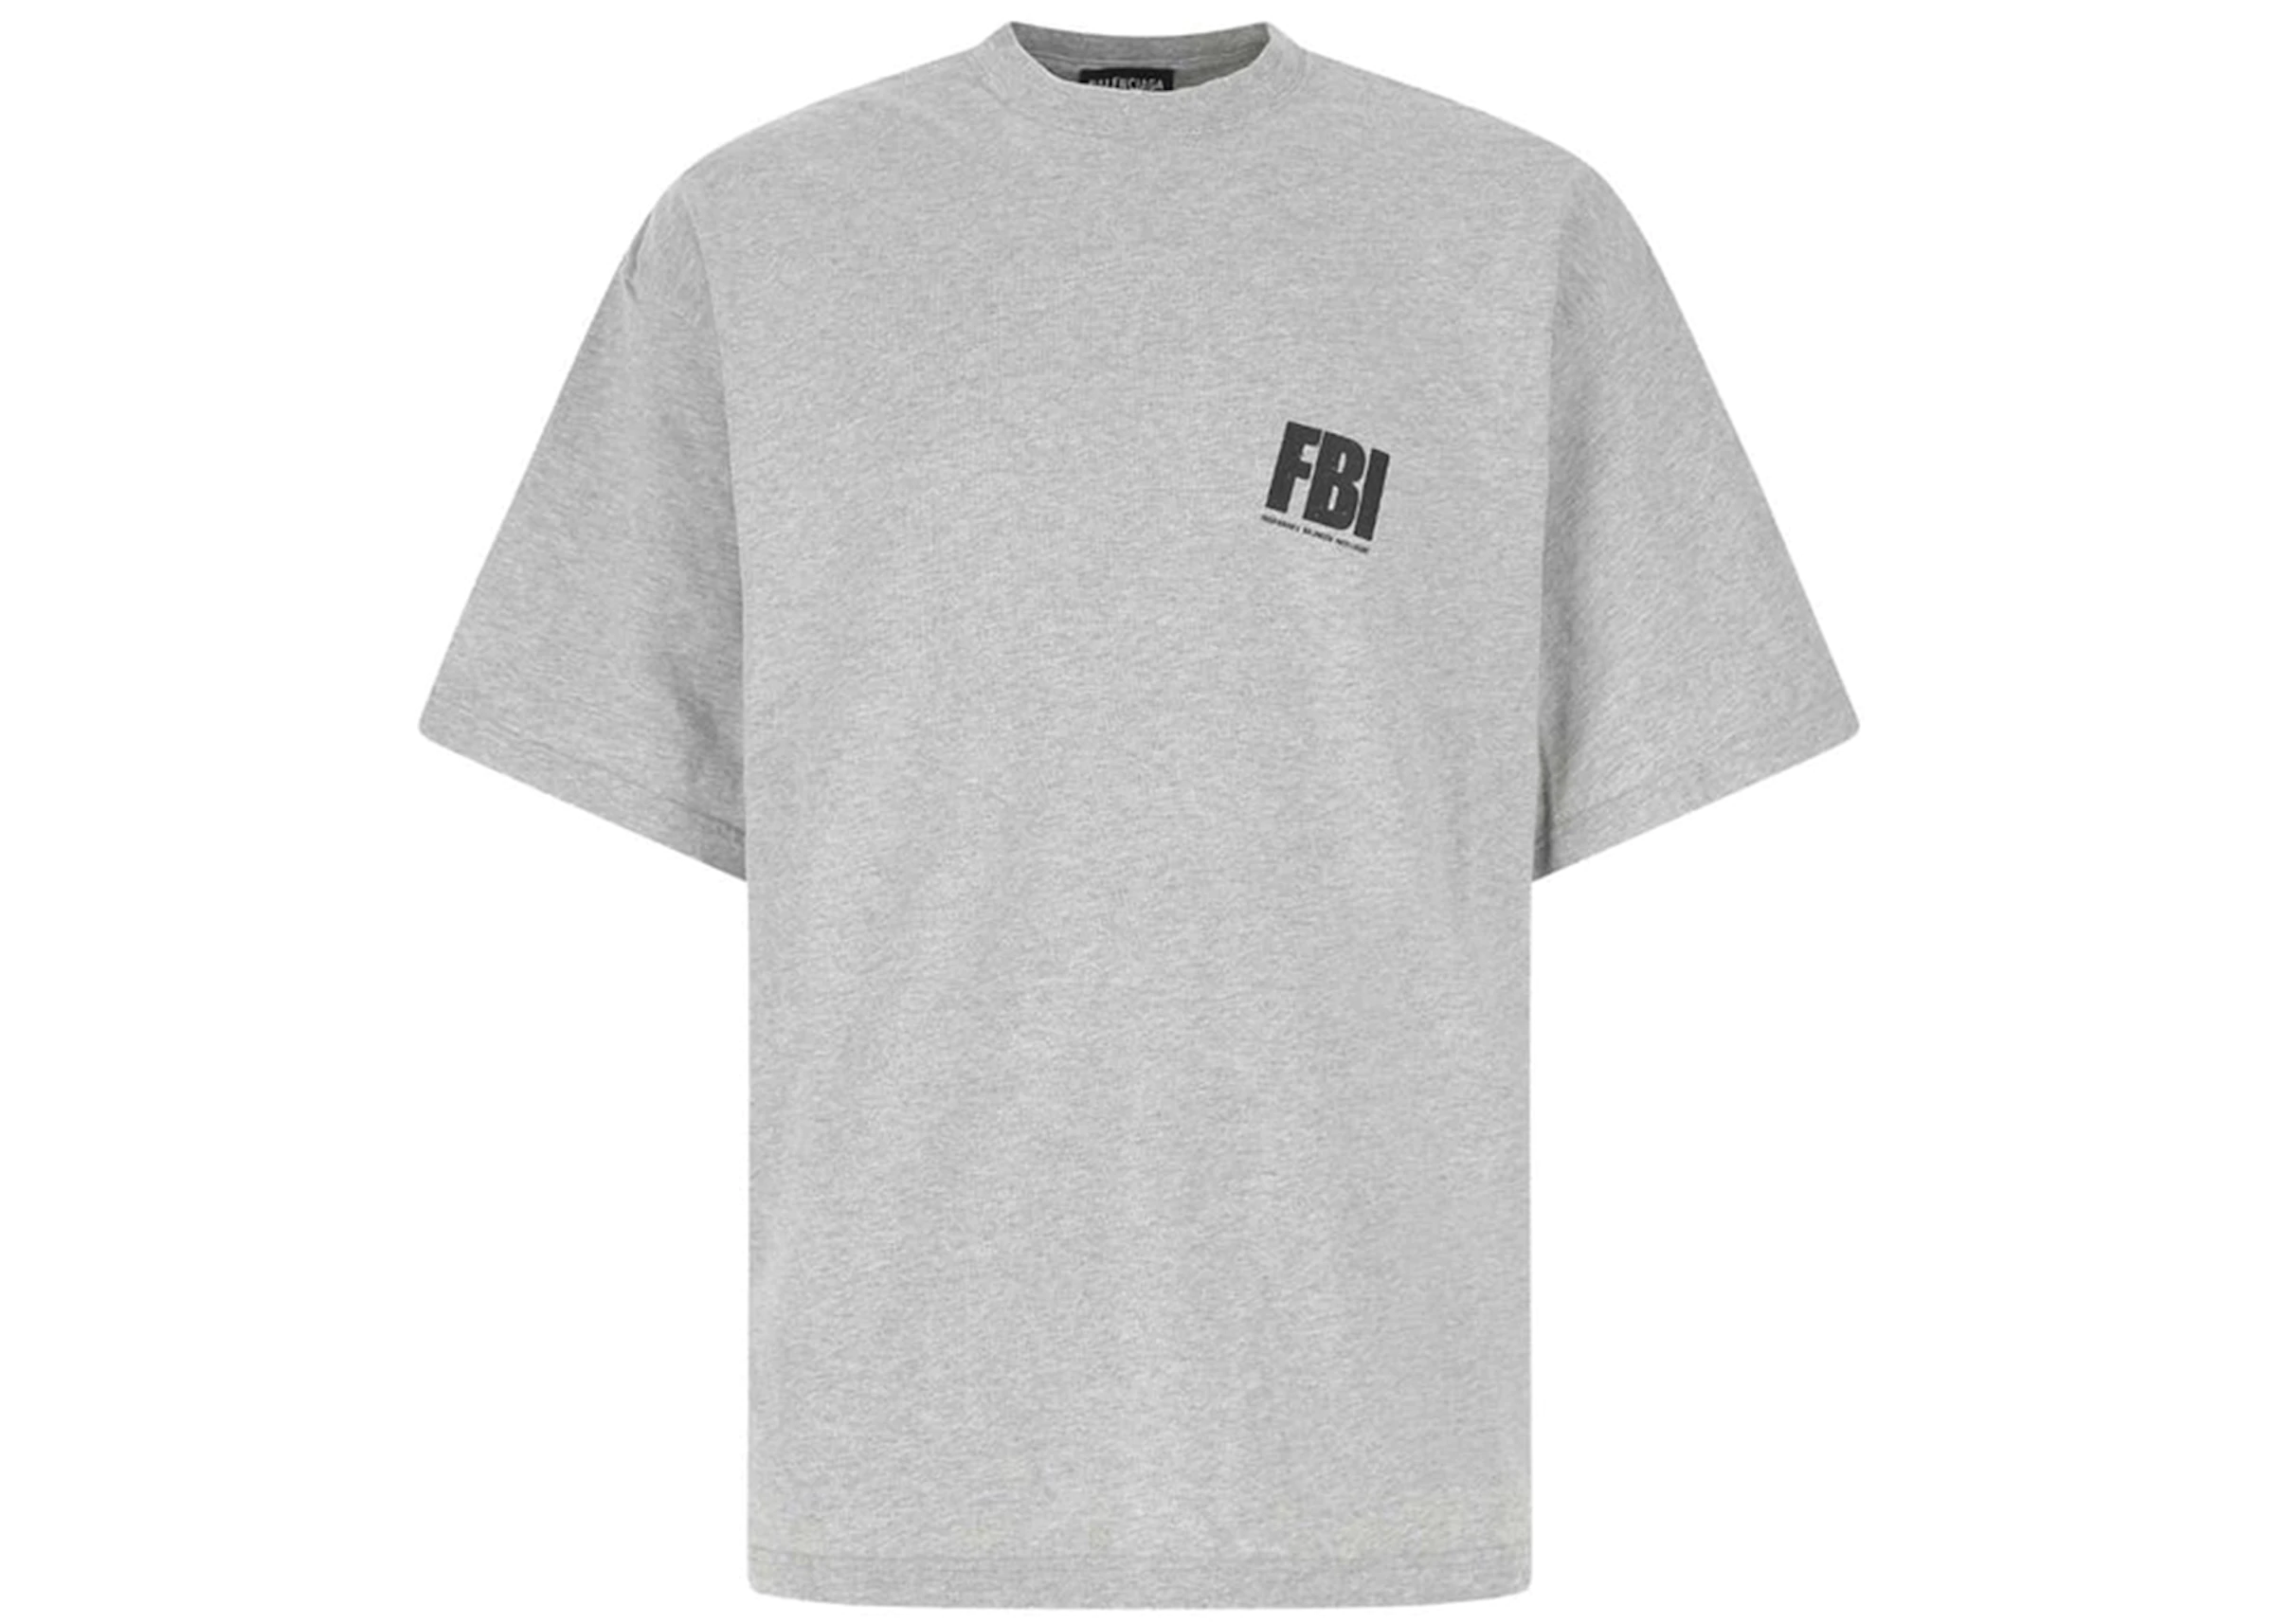 FBI Print T-Shirt Grey/Black -